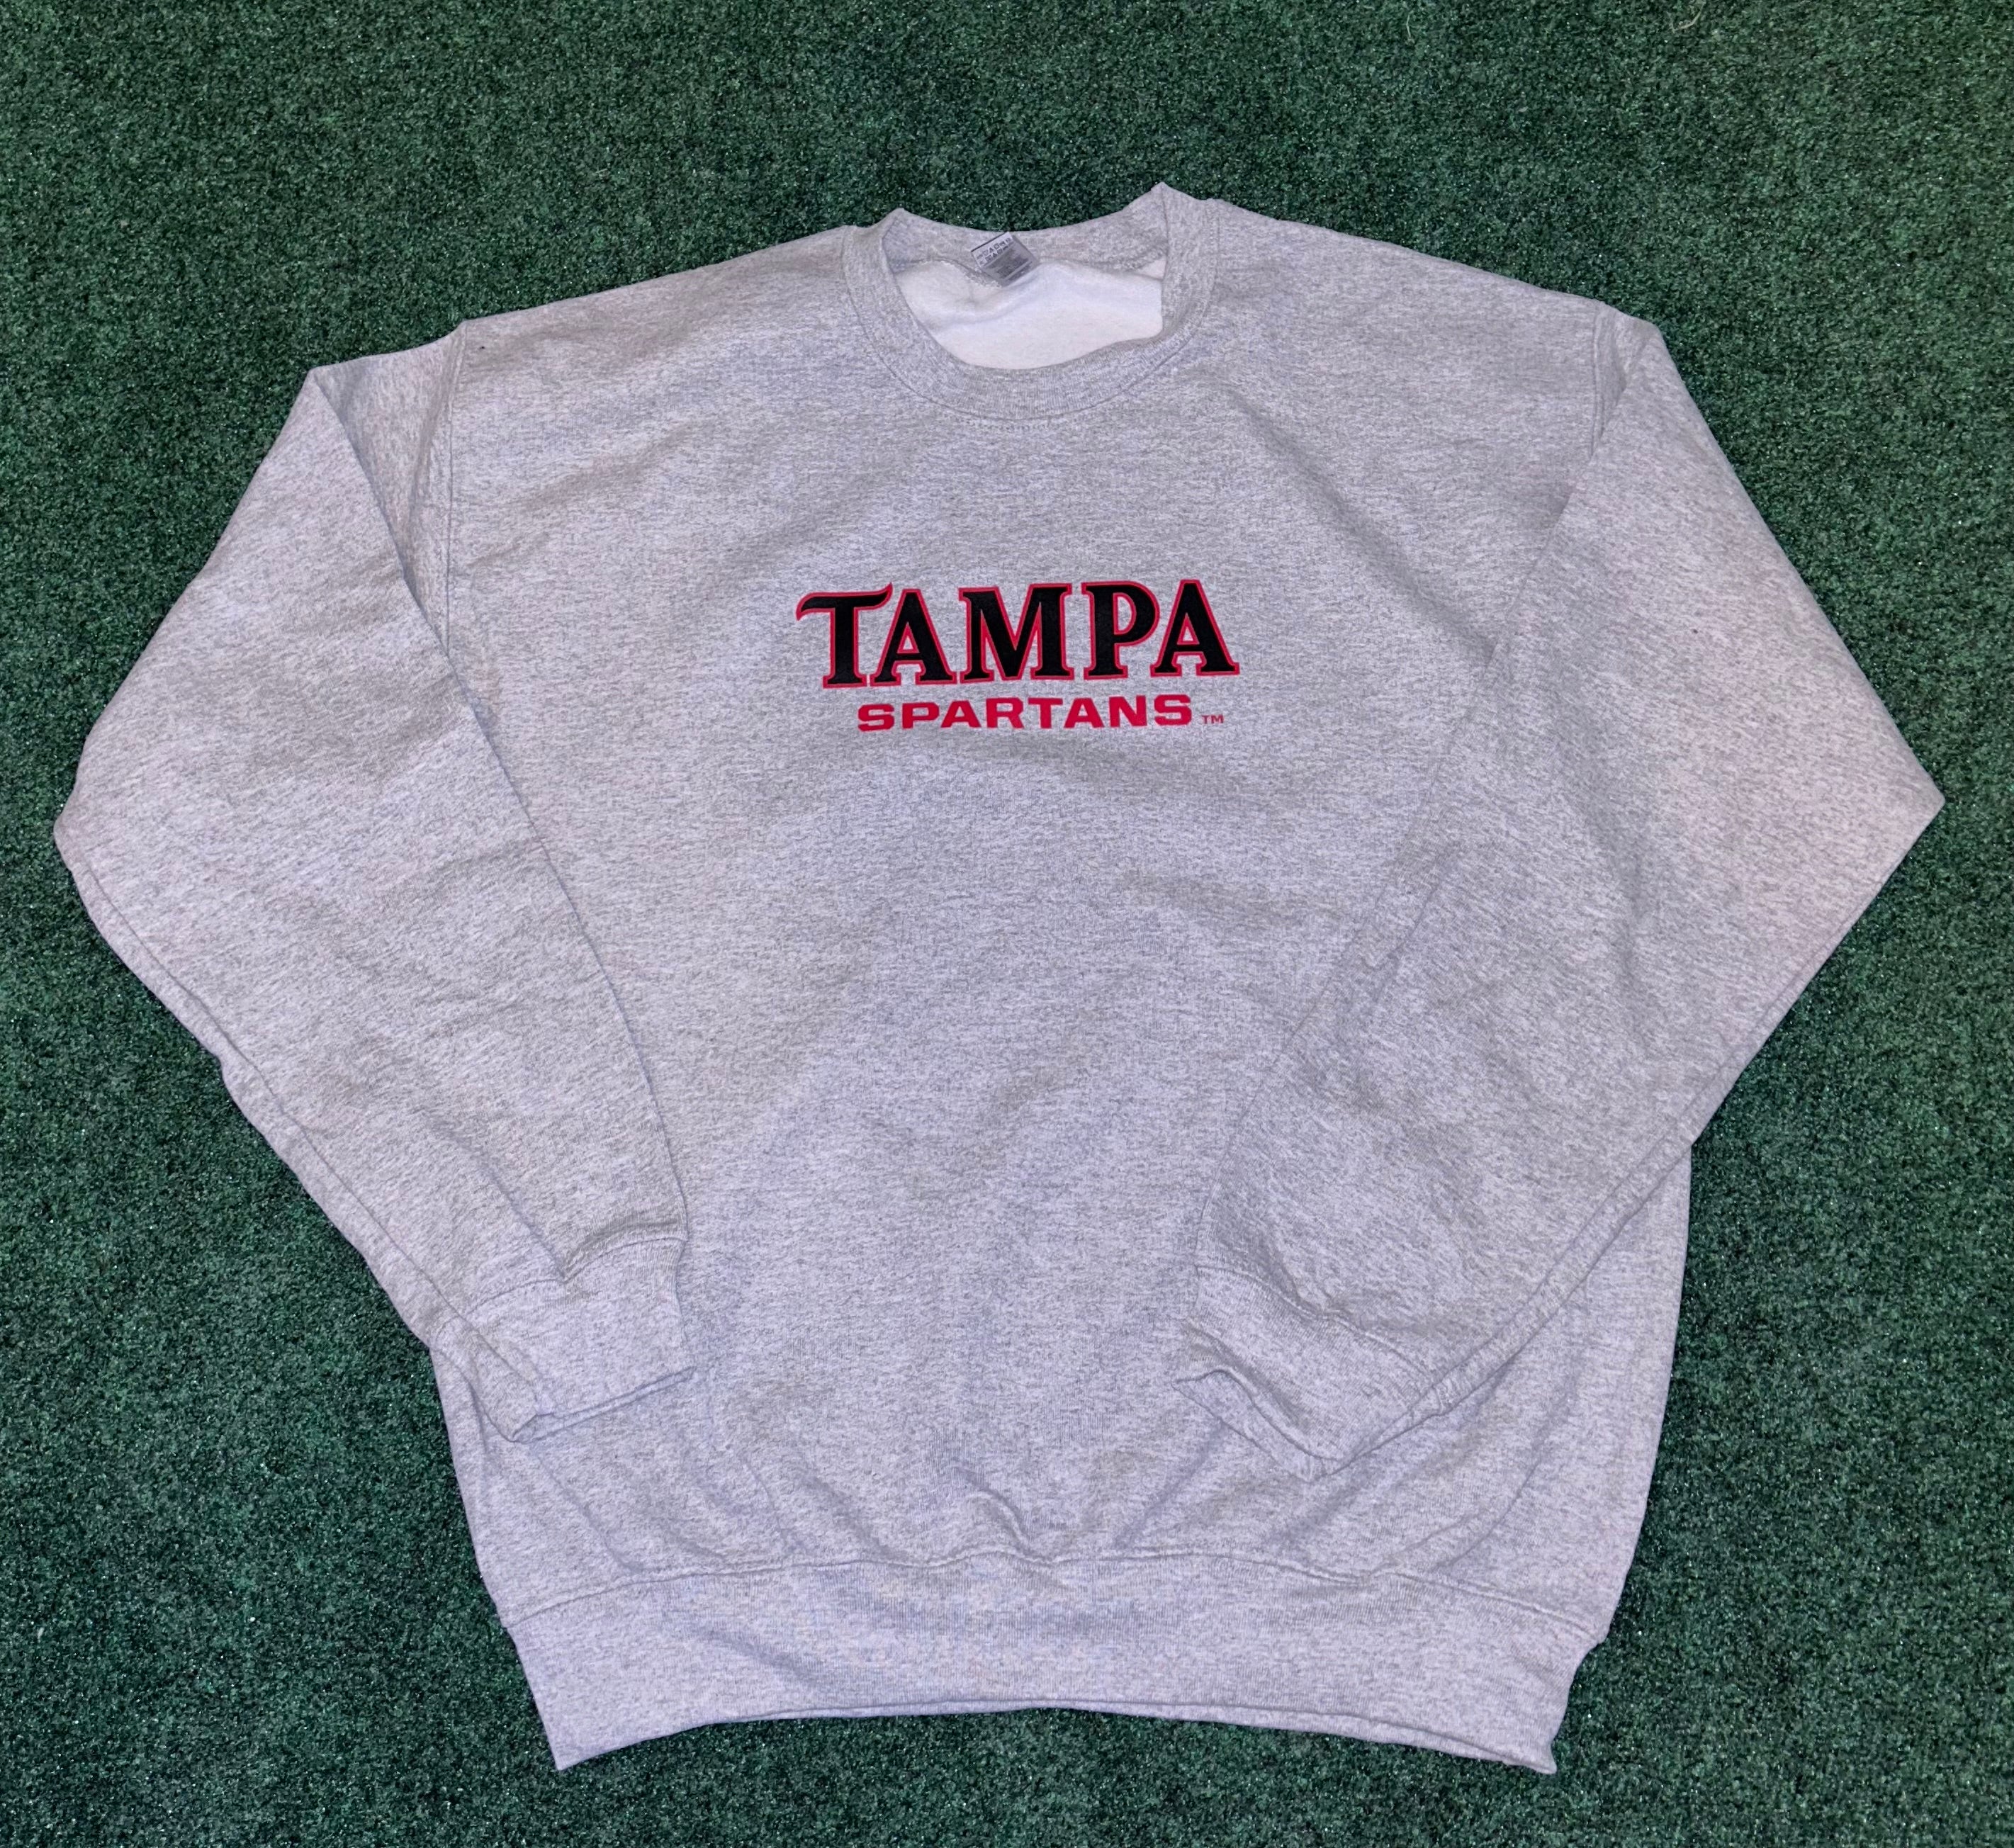 University of Tampa Spartan Sweatshirt